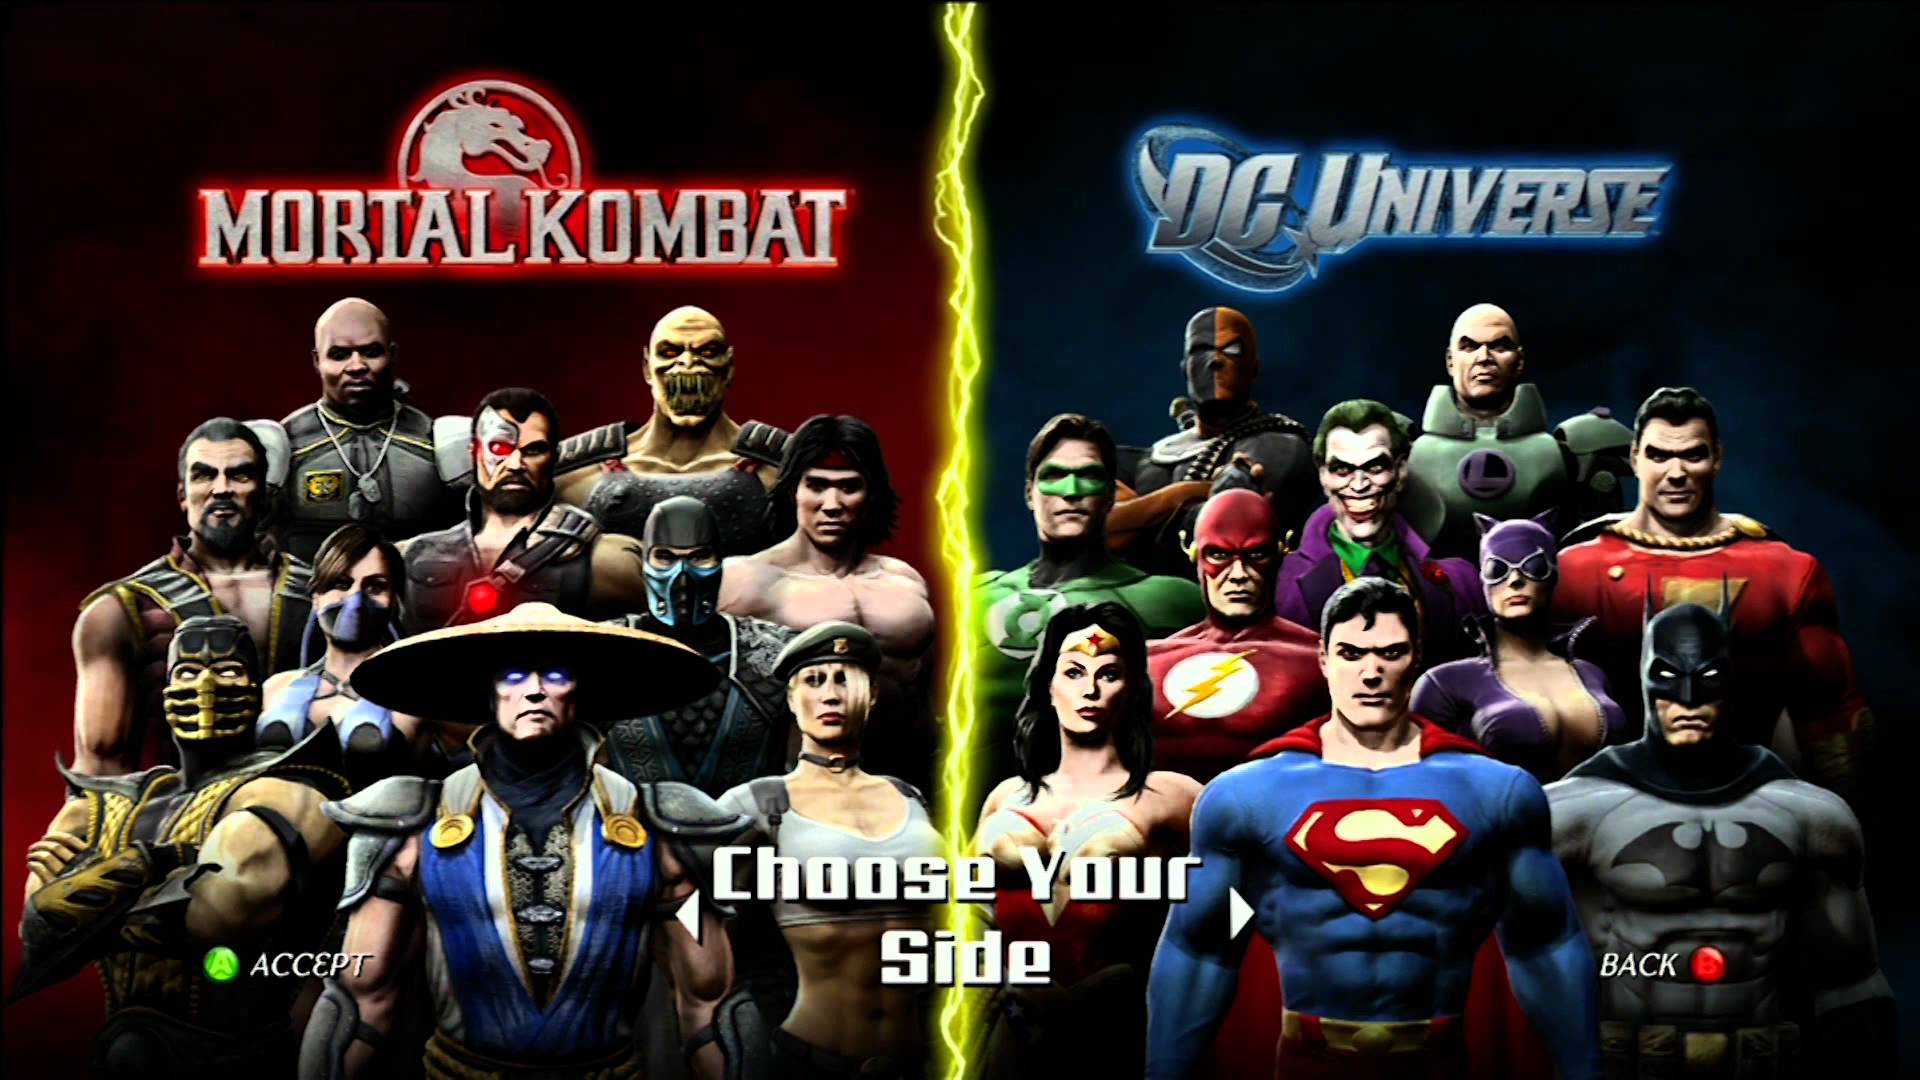 Let's Dub Mortal Kombat vs DC Universe Your Side!